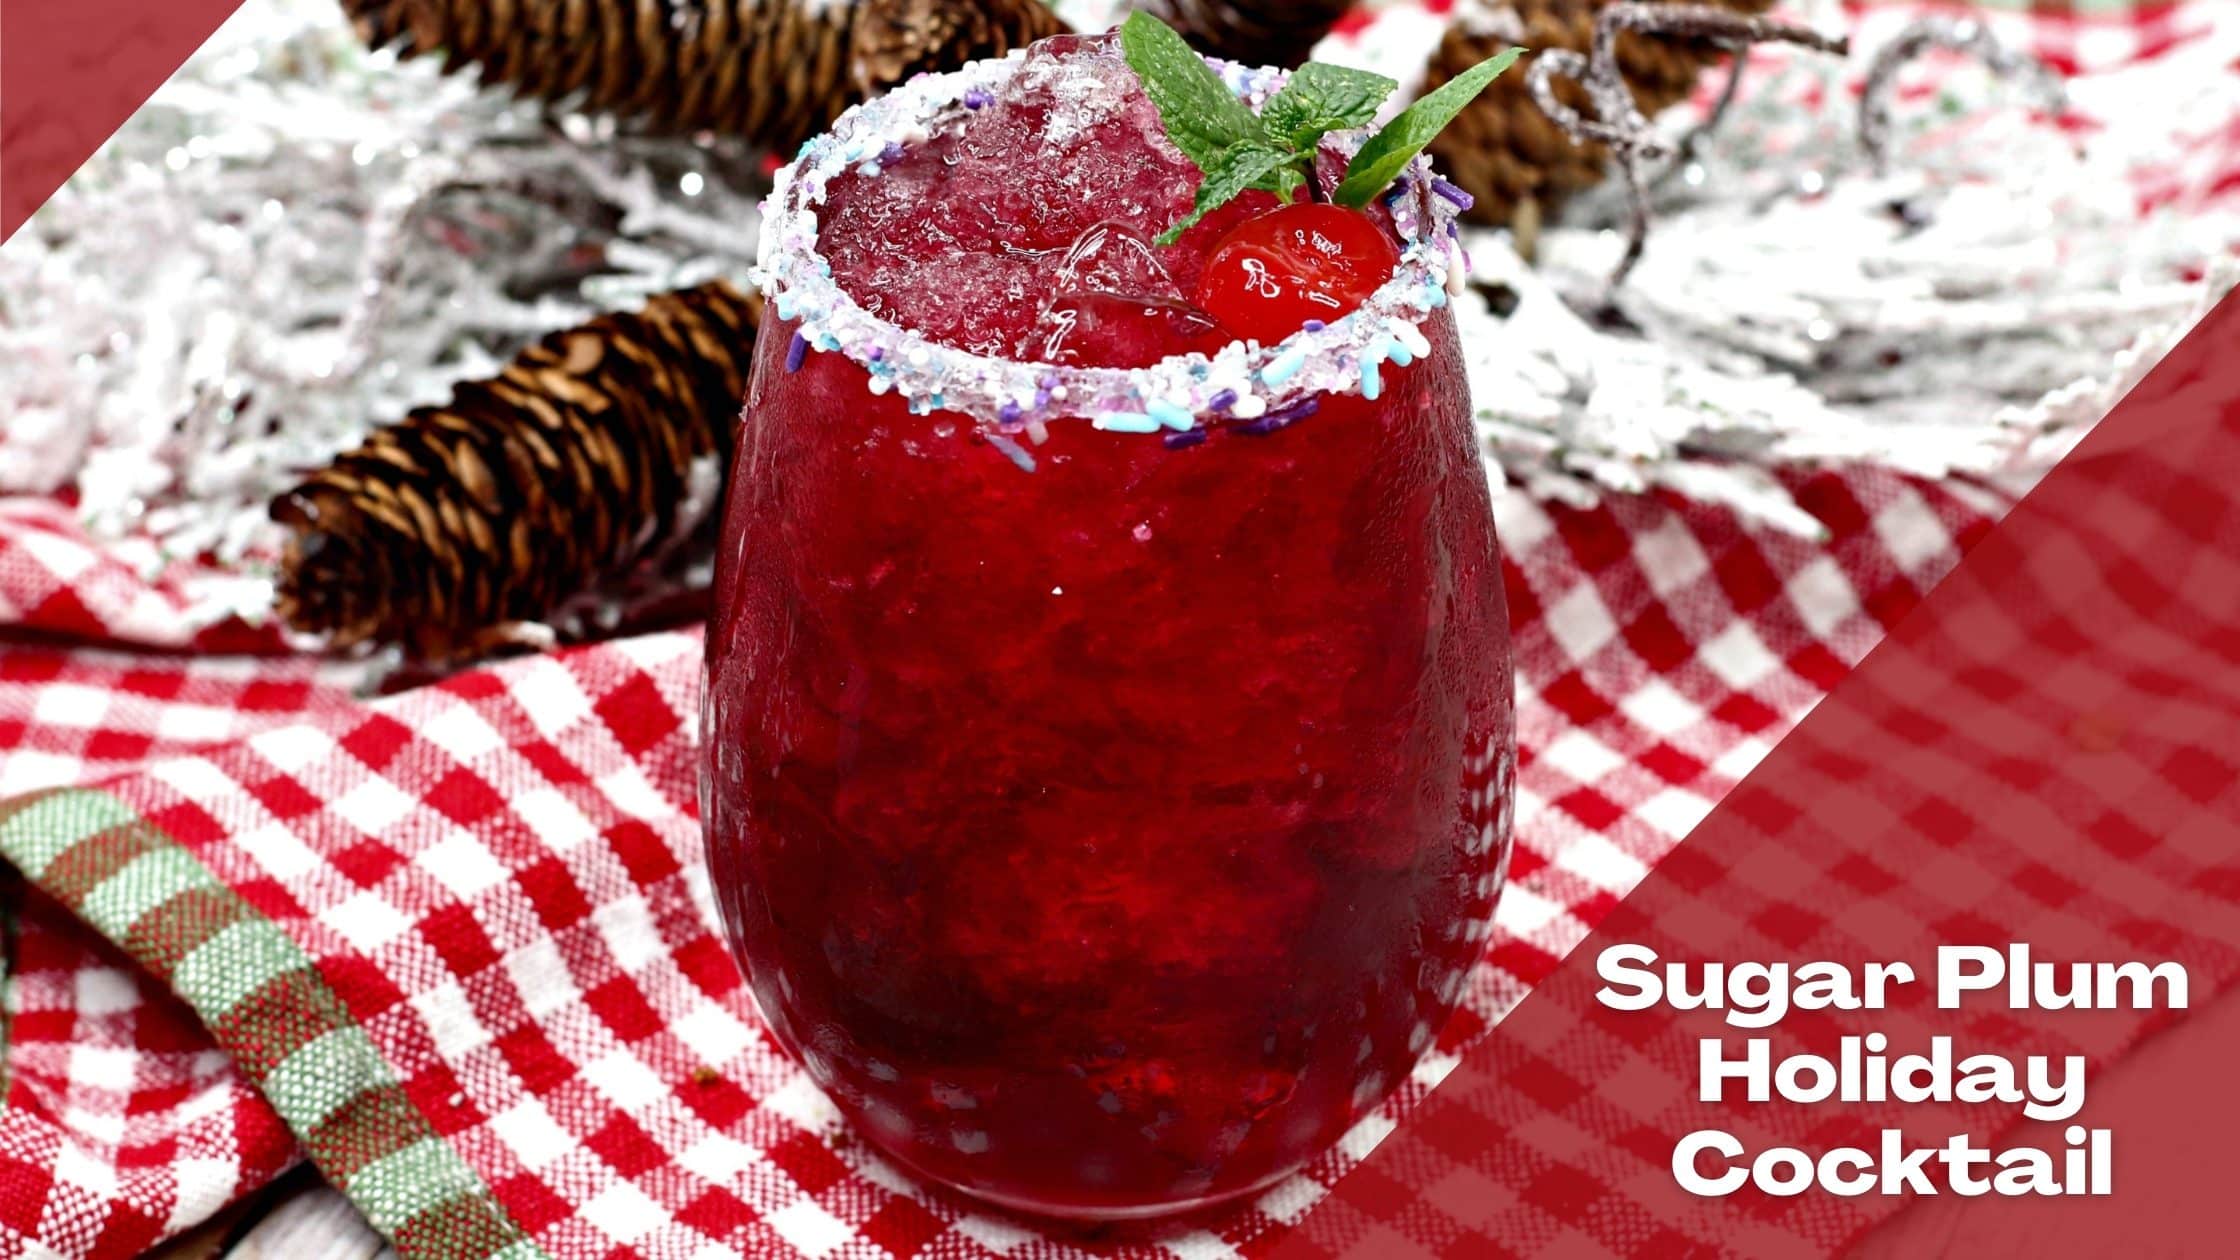 Sugar Plum Holiday Cocktail